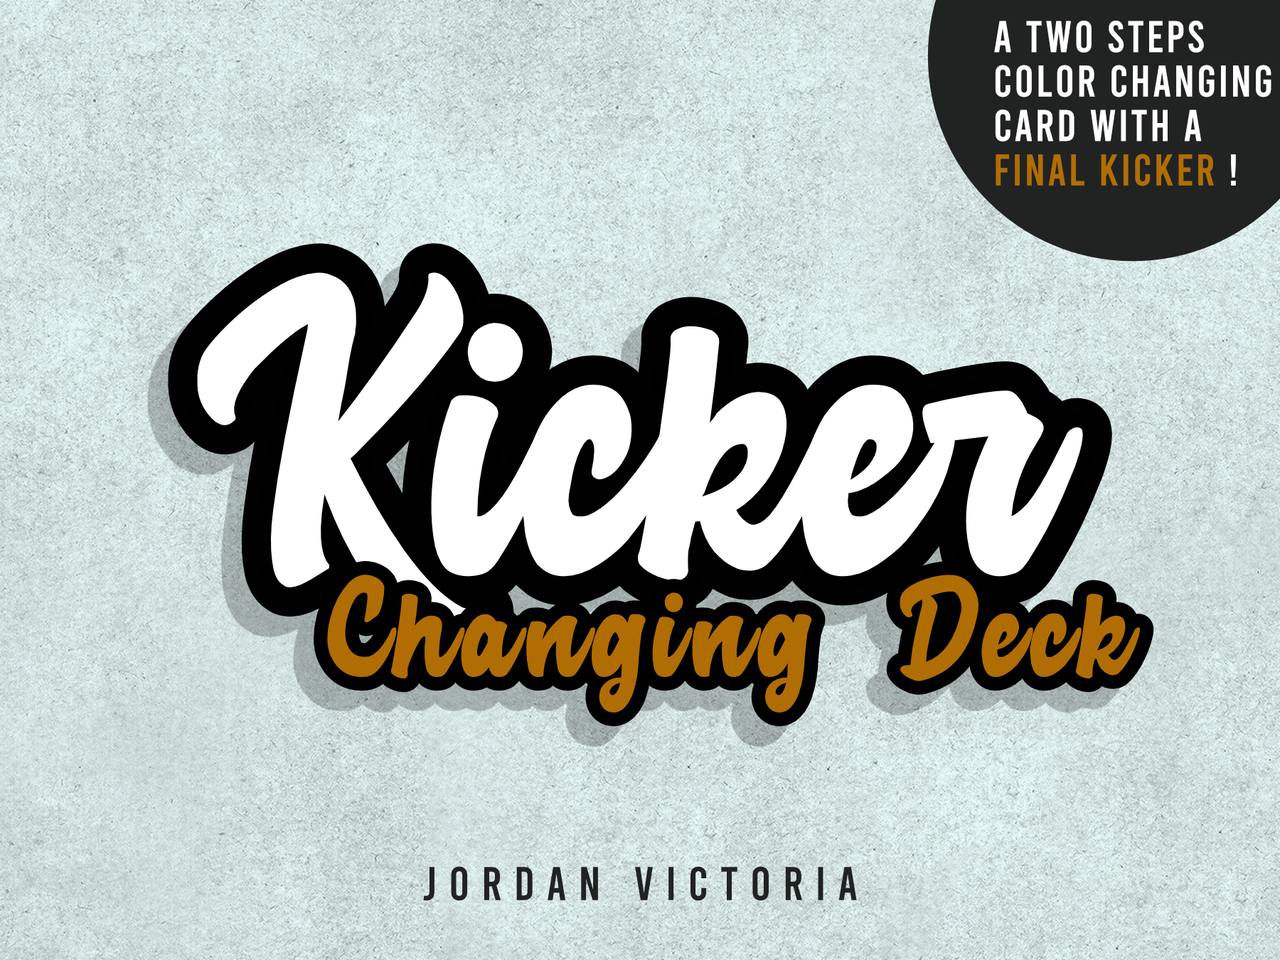 Jordan Victoria - Kicker Changing Deck